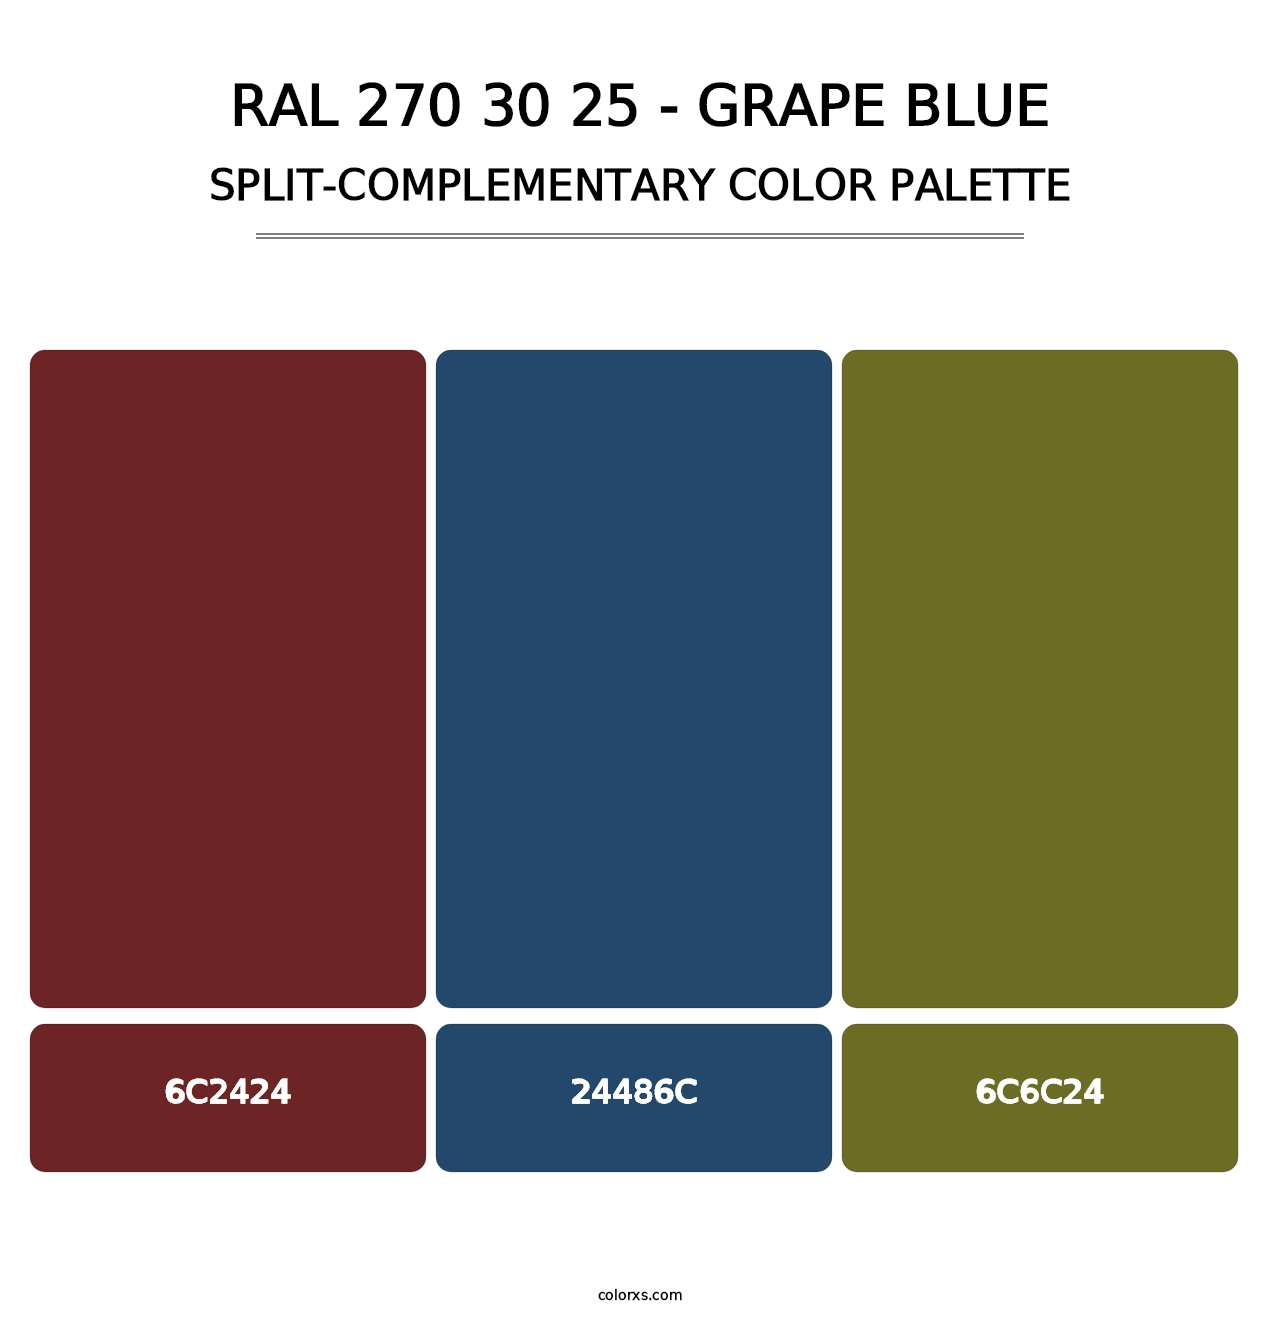 RAL 270 30 25 - Grape Blue - Split-Complementary Color Palette